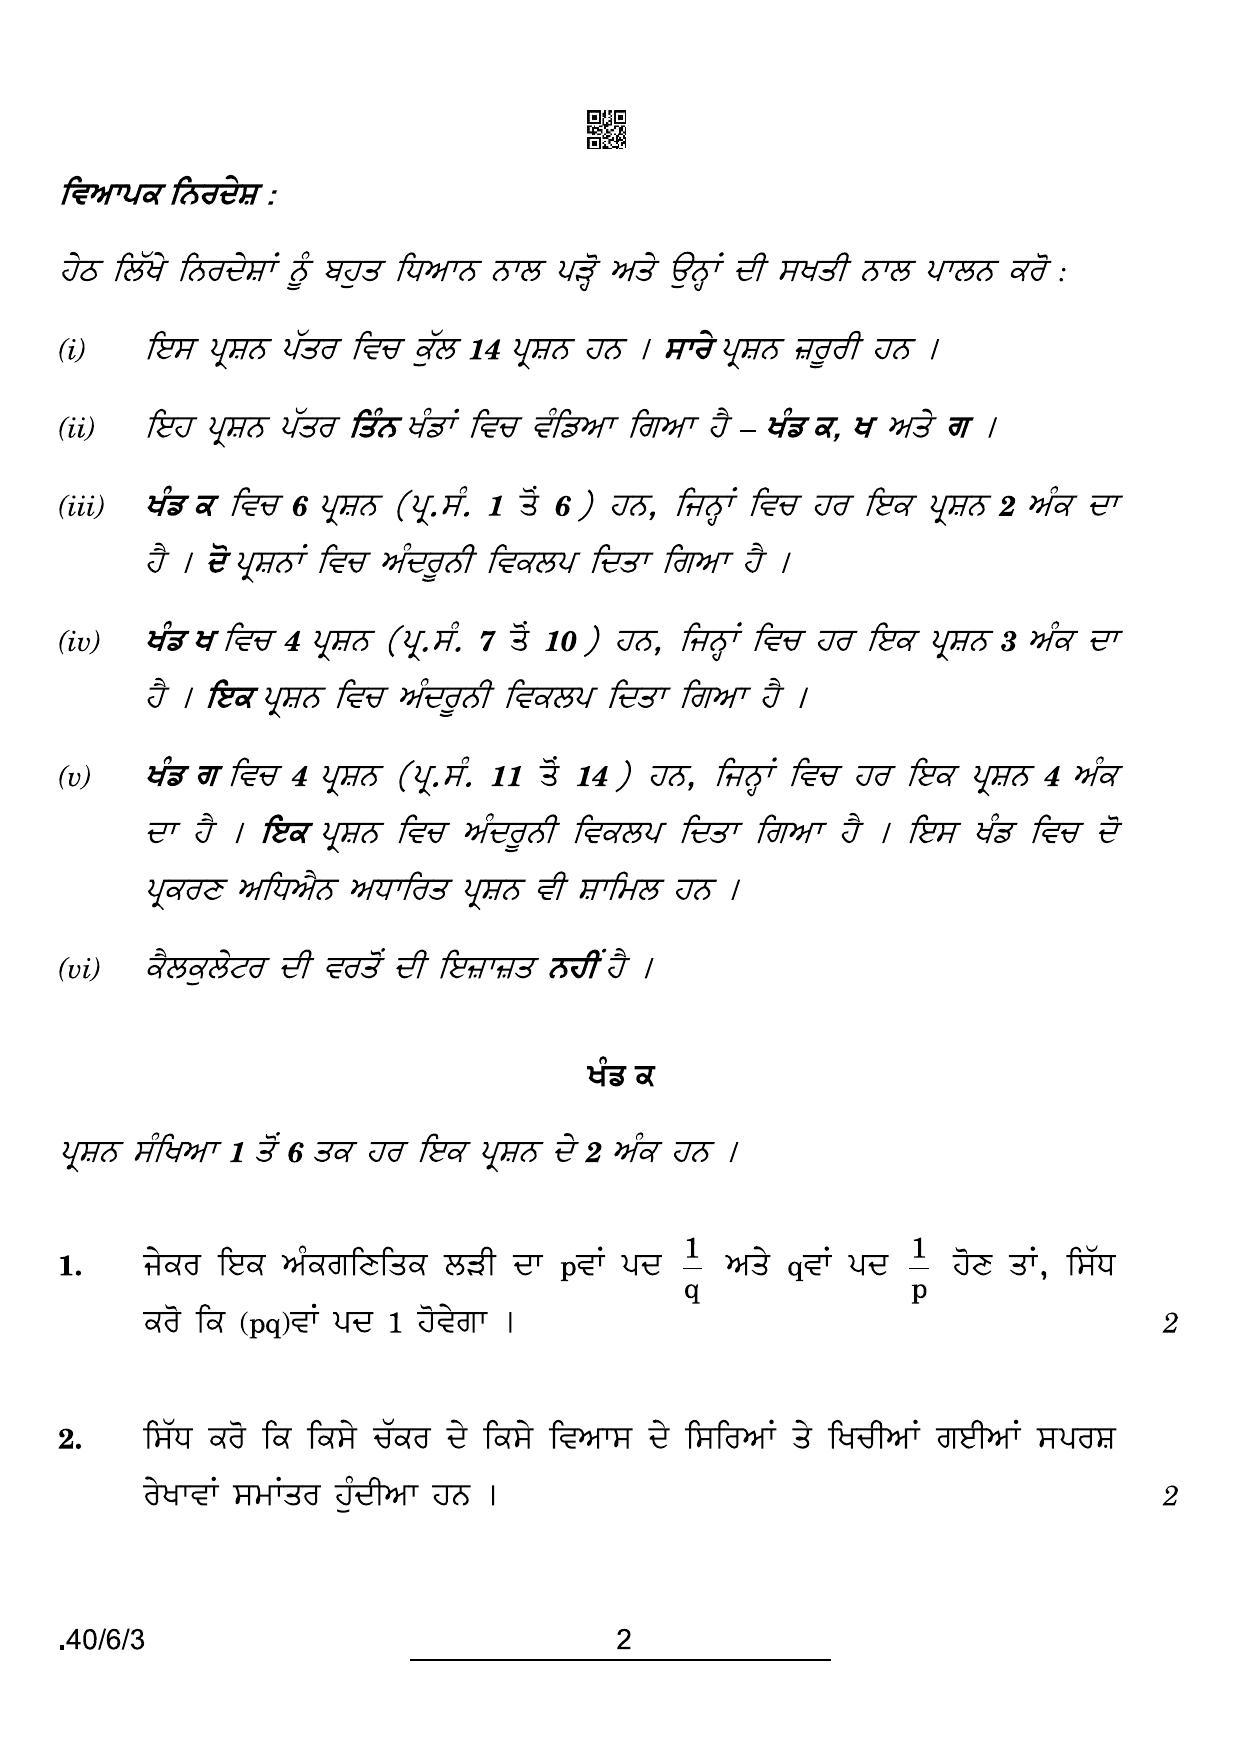 CBSE Class 10 40-6-3 Maths Std Punjabi 2022 Compartment Question Paper - Page 2